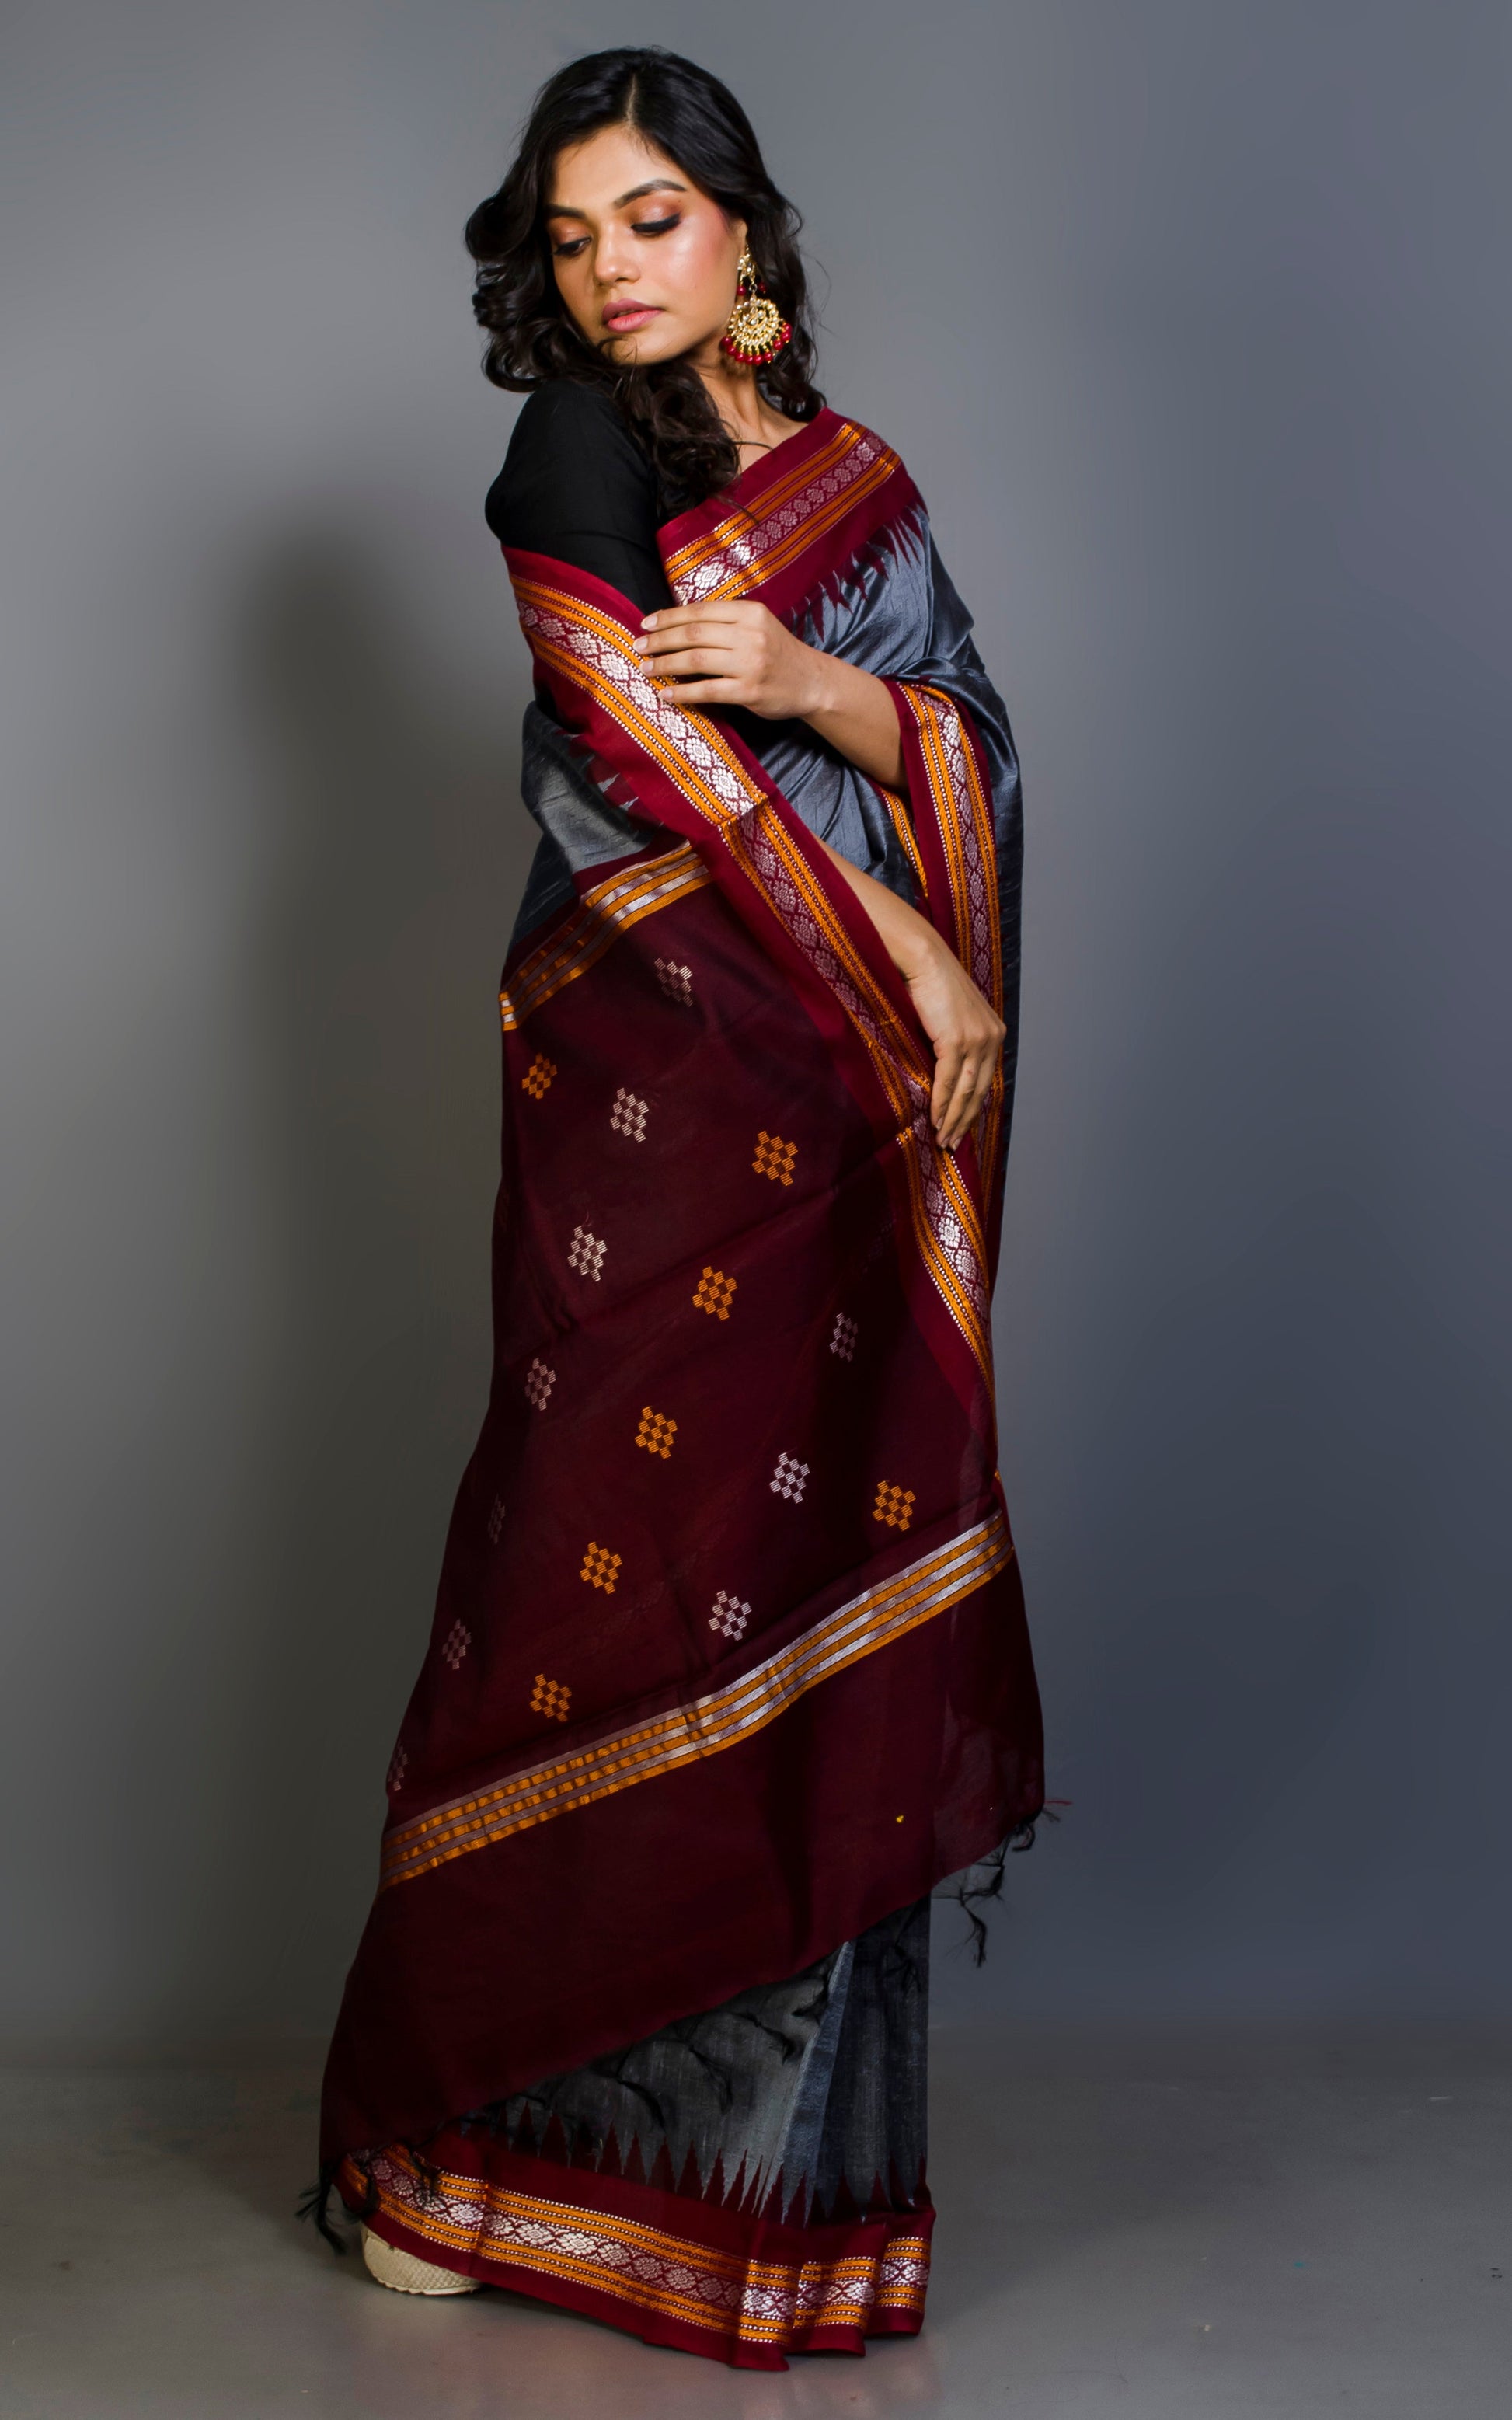 Vidarbha Tussar Raw Silk Saree in Pewter Grey, Maroon, Sunset Orange and Off White